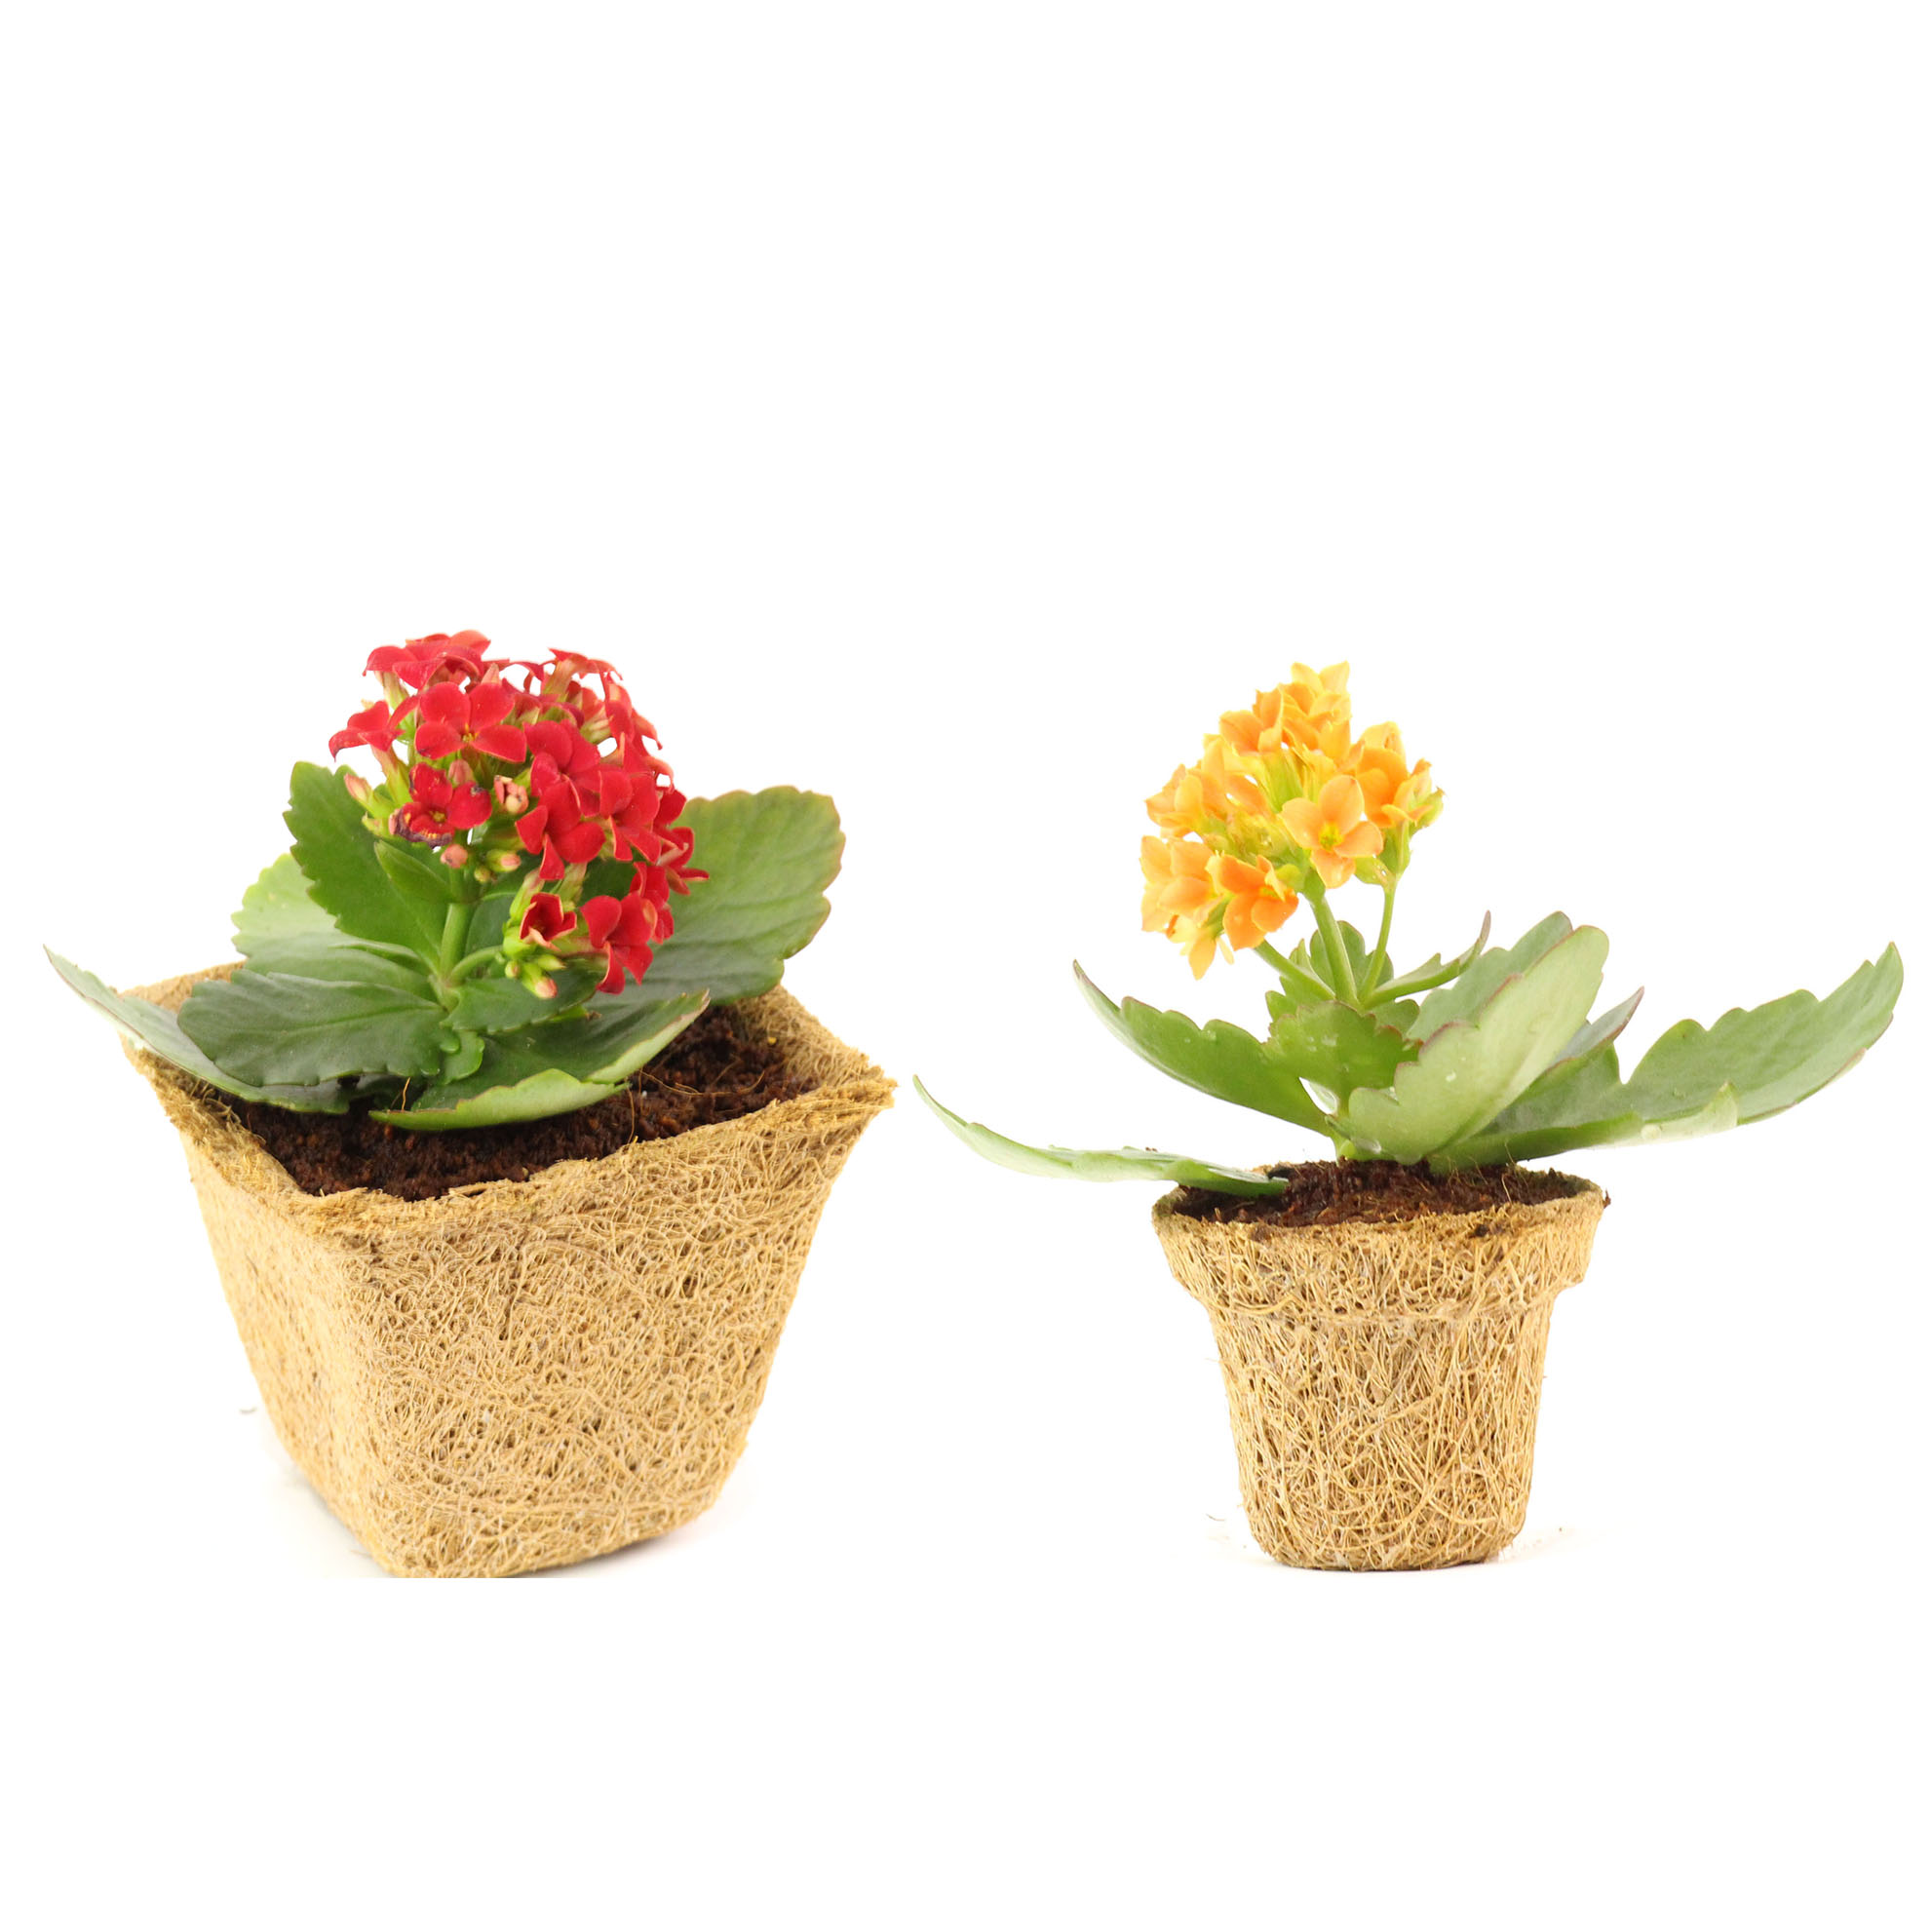 Details about   36 Pack Coco Coir Planter Nursery Pots 2.5" Biodegradable Seedling 36pcs 